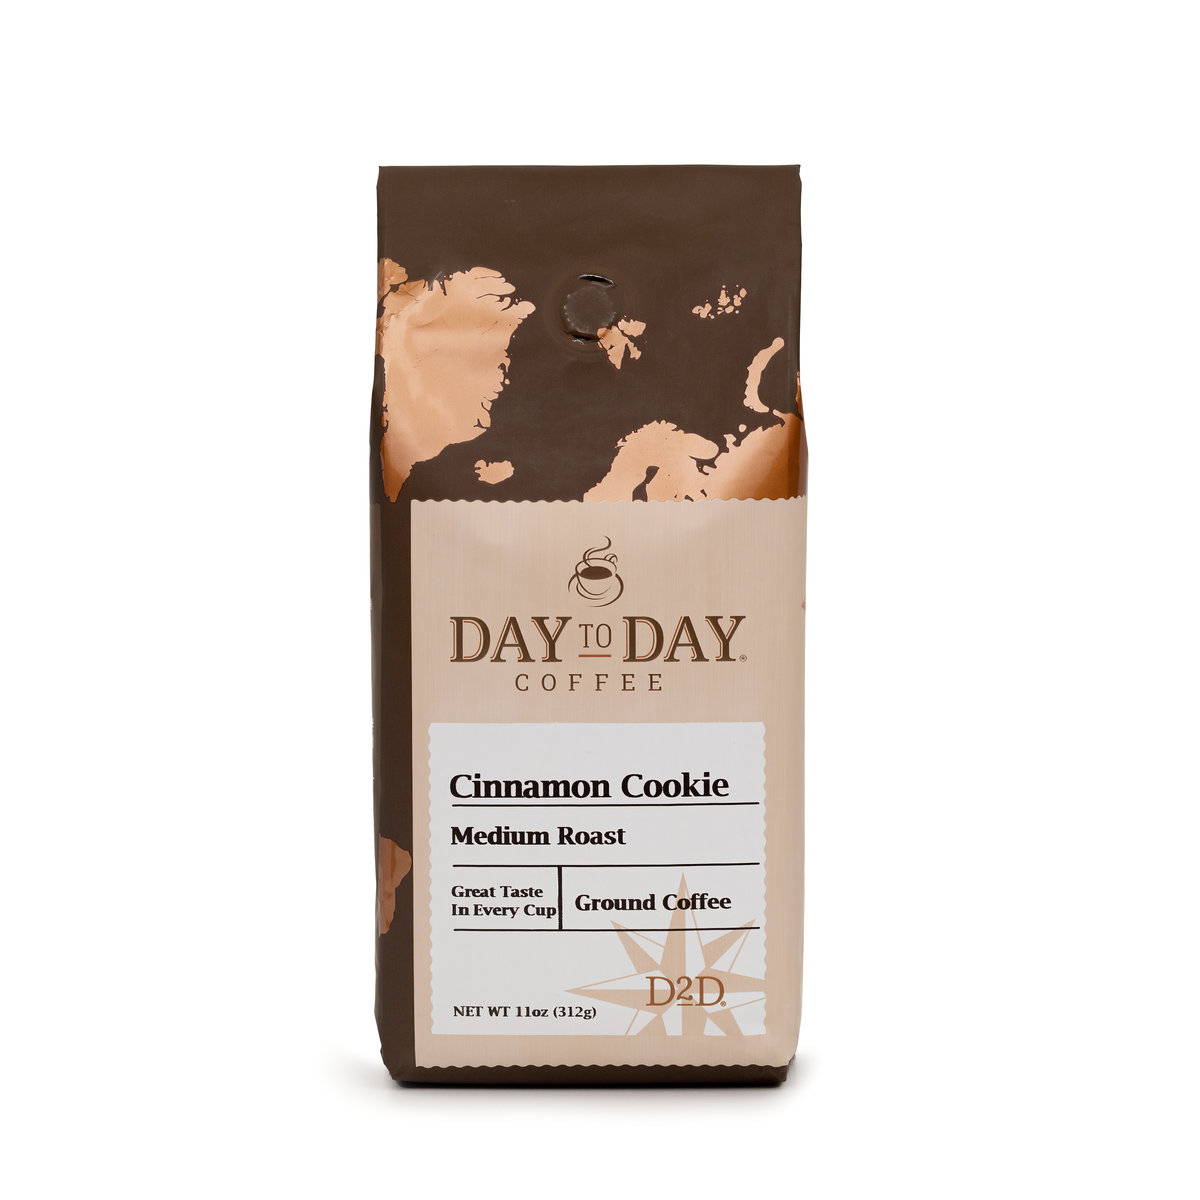 Day to day coffee 11oz cinnamon cookie medium roast ground coffee - 1